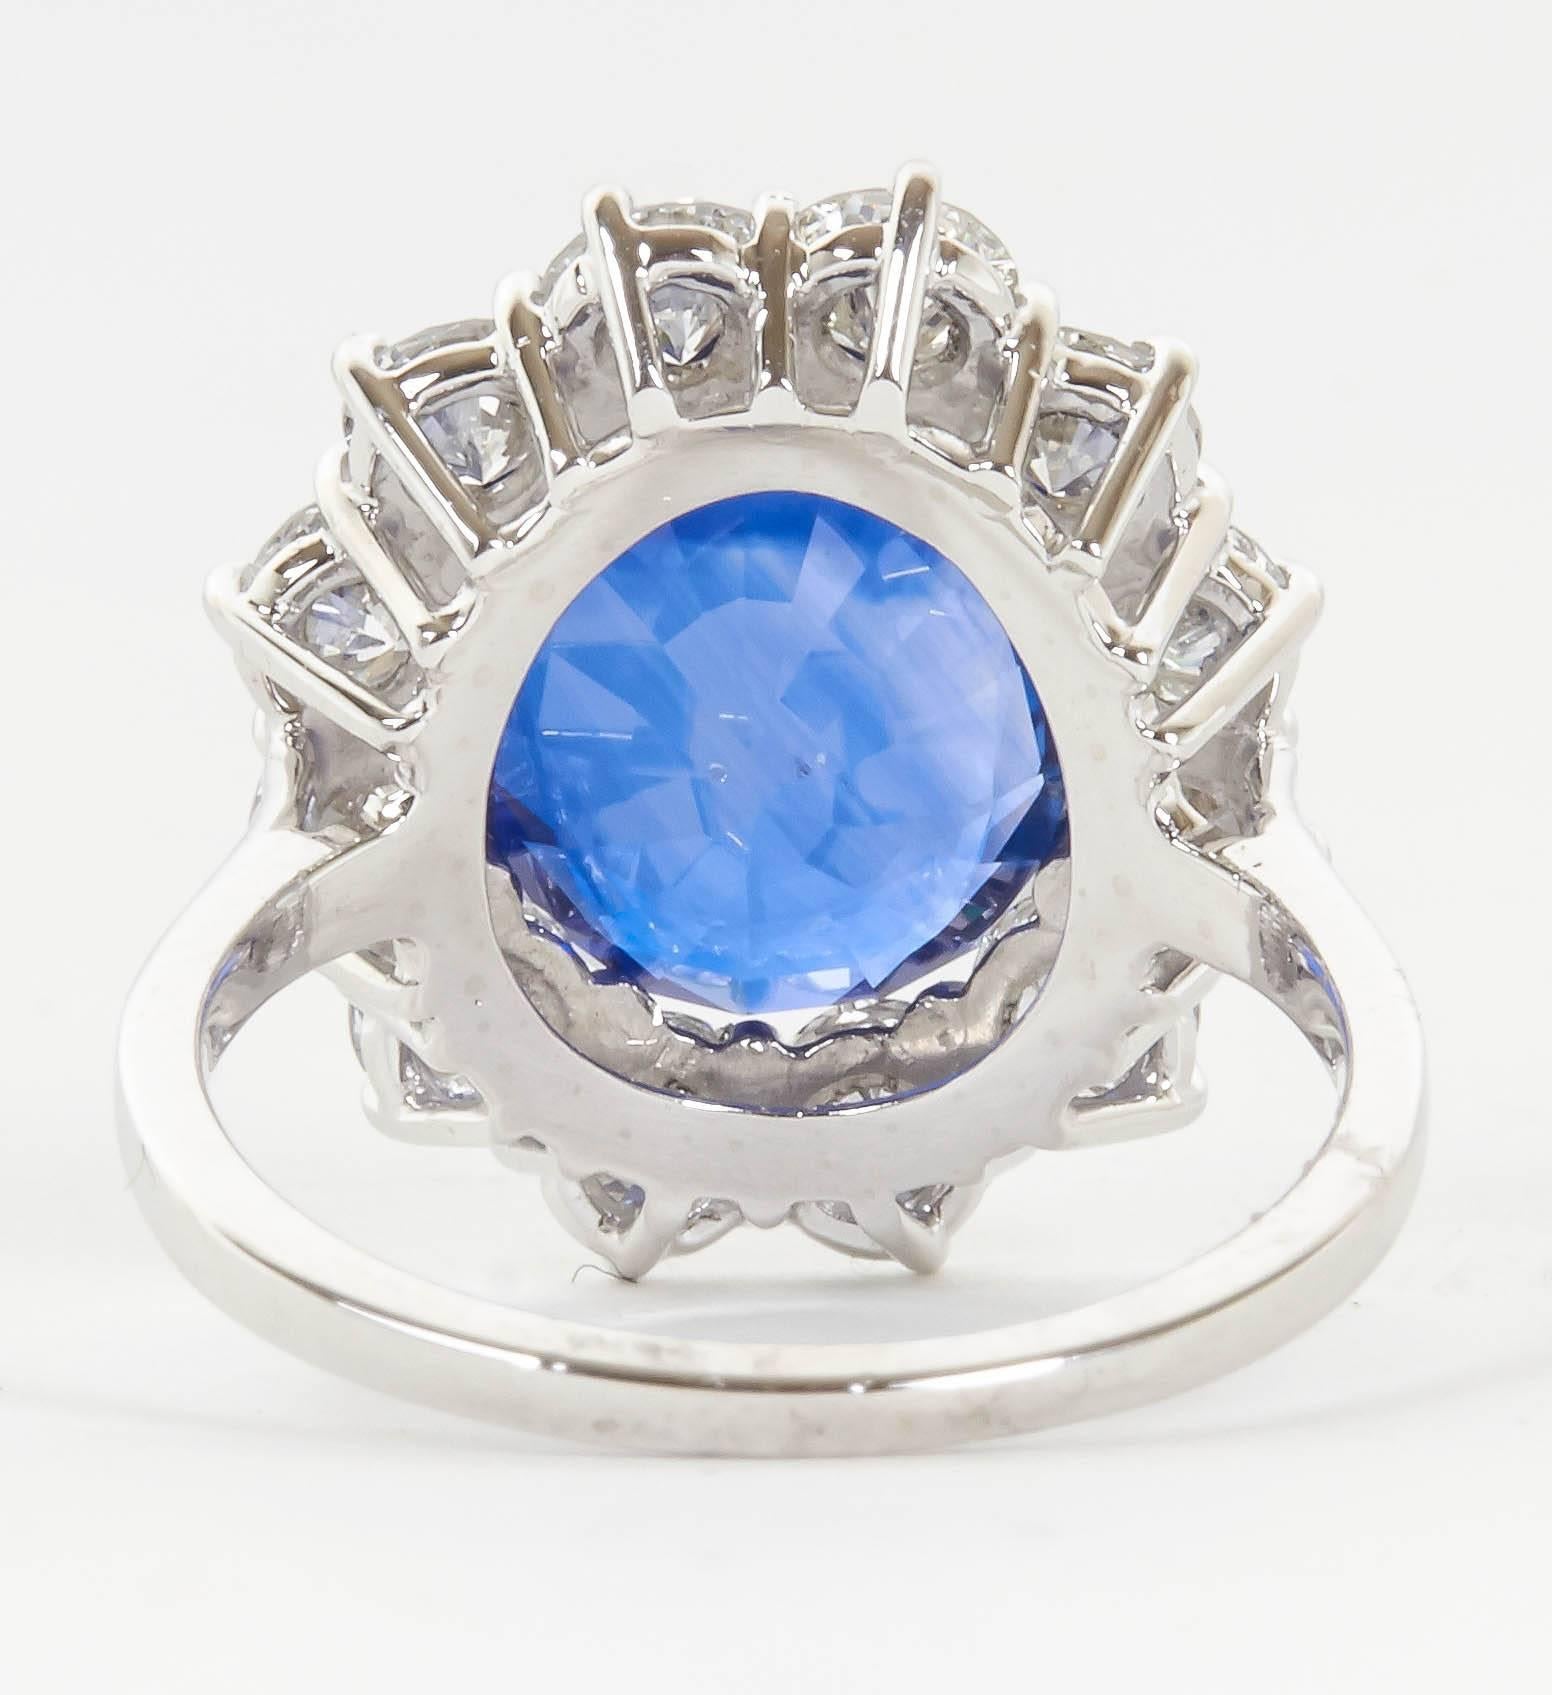 6 carat blue sapphire ring